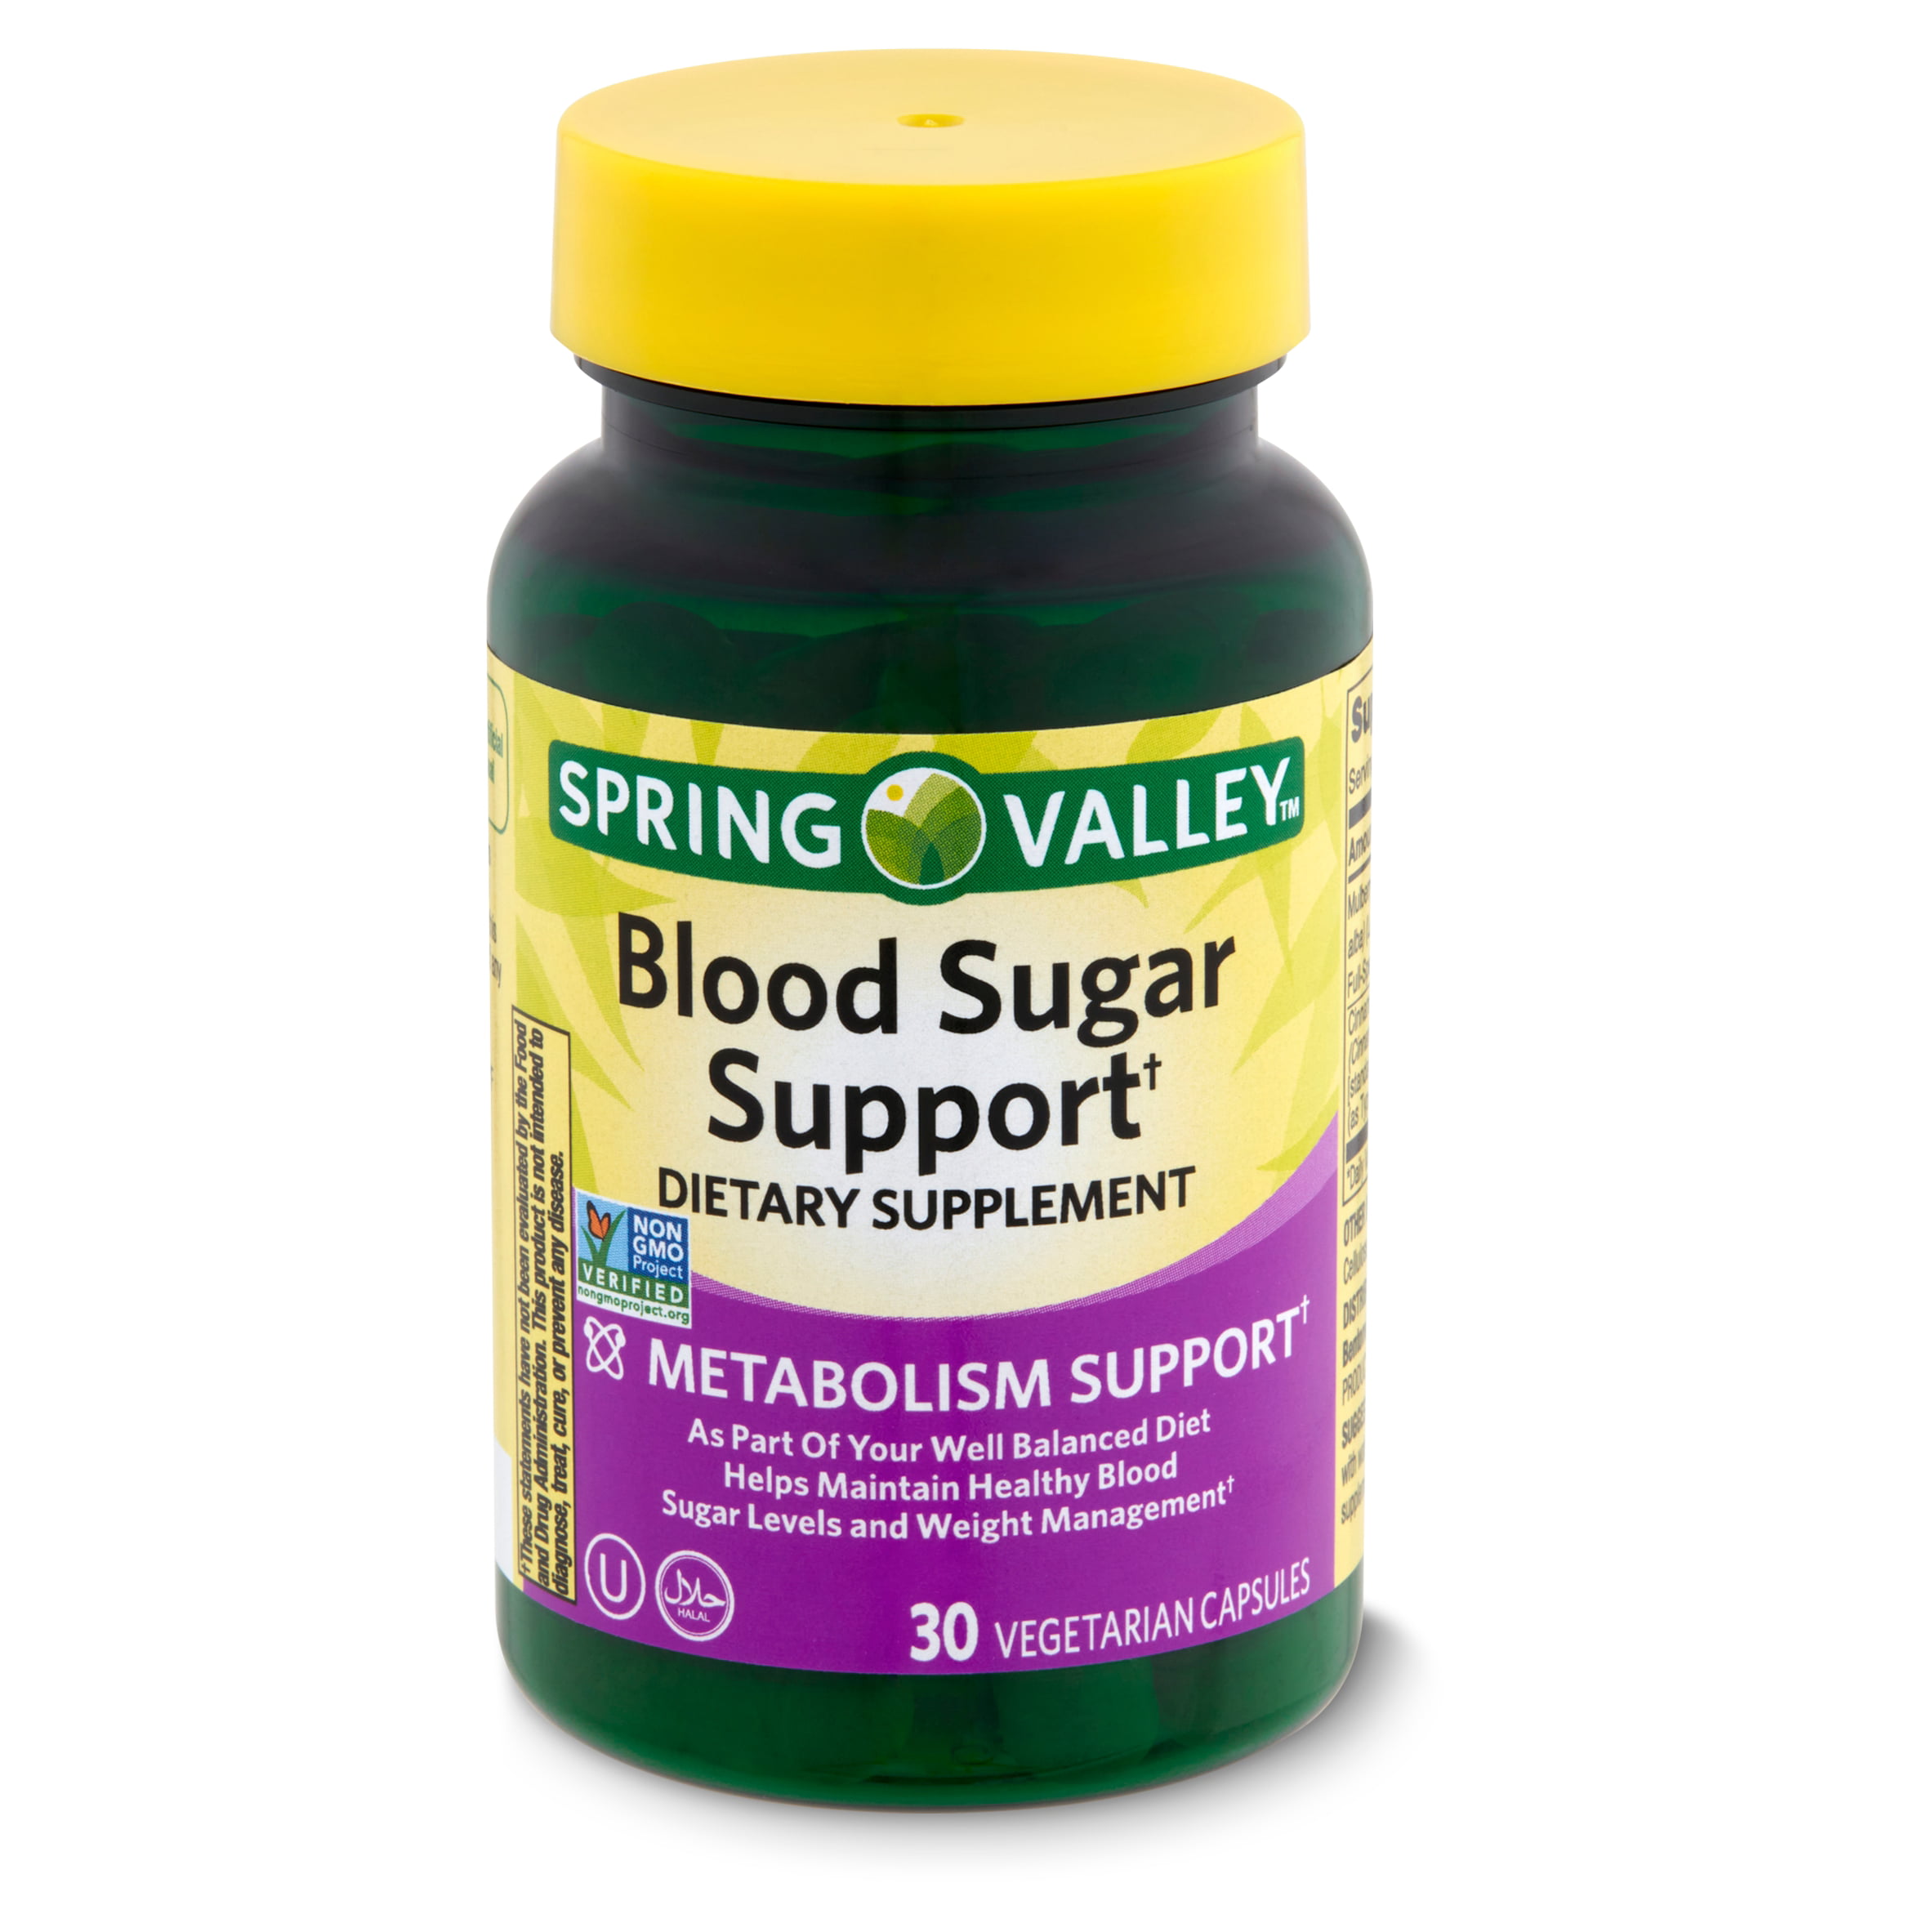 LifeSeasons - Effective, All-Natural Blood Sugar Support